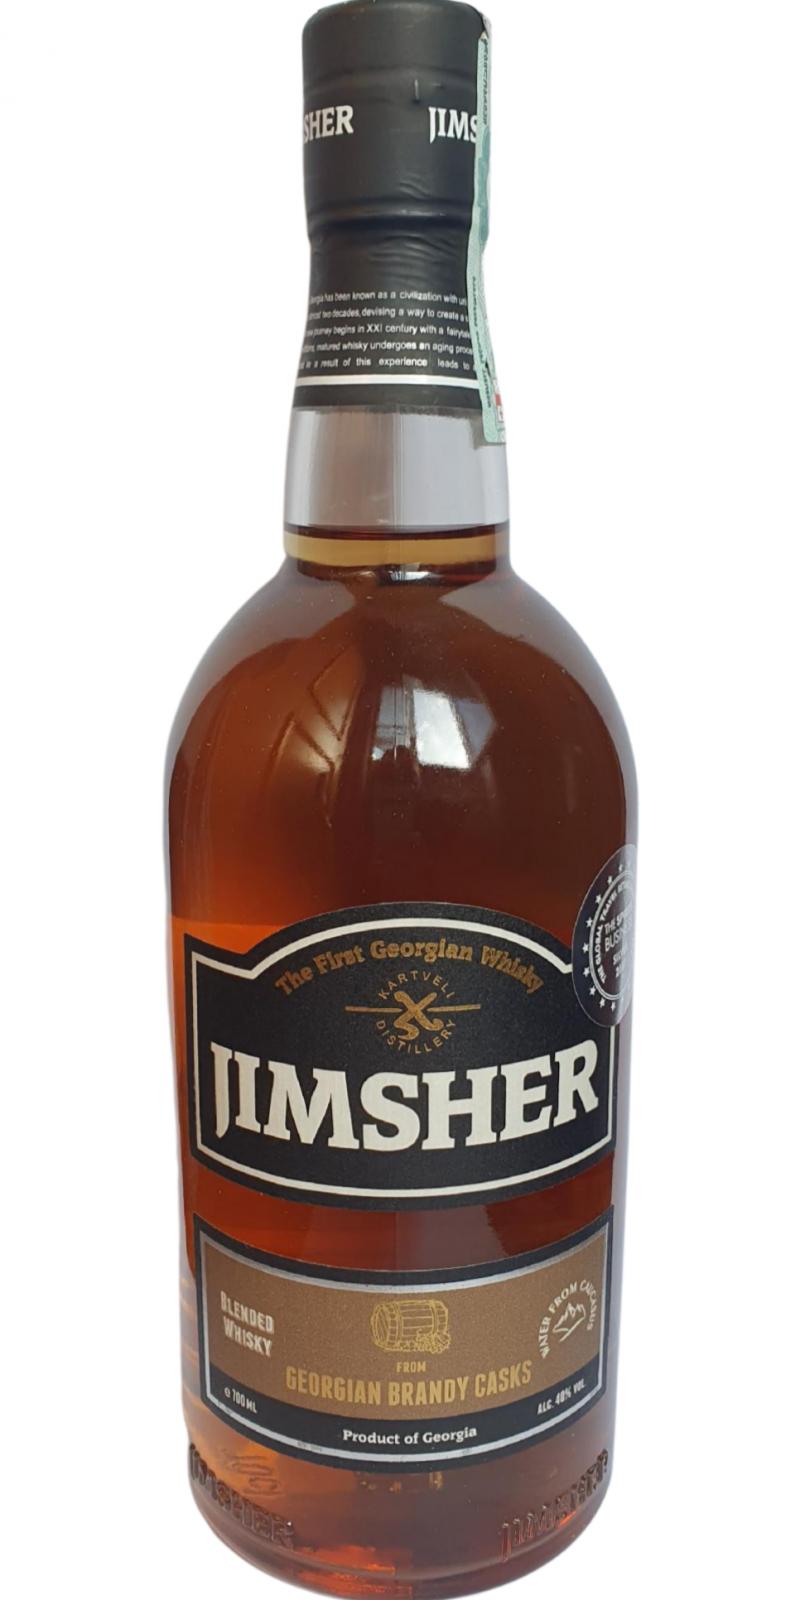 Jimsher Georgian Brandy Casks